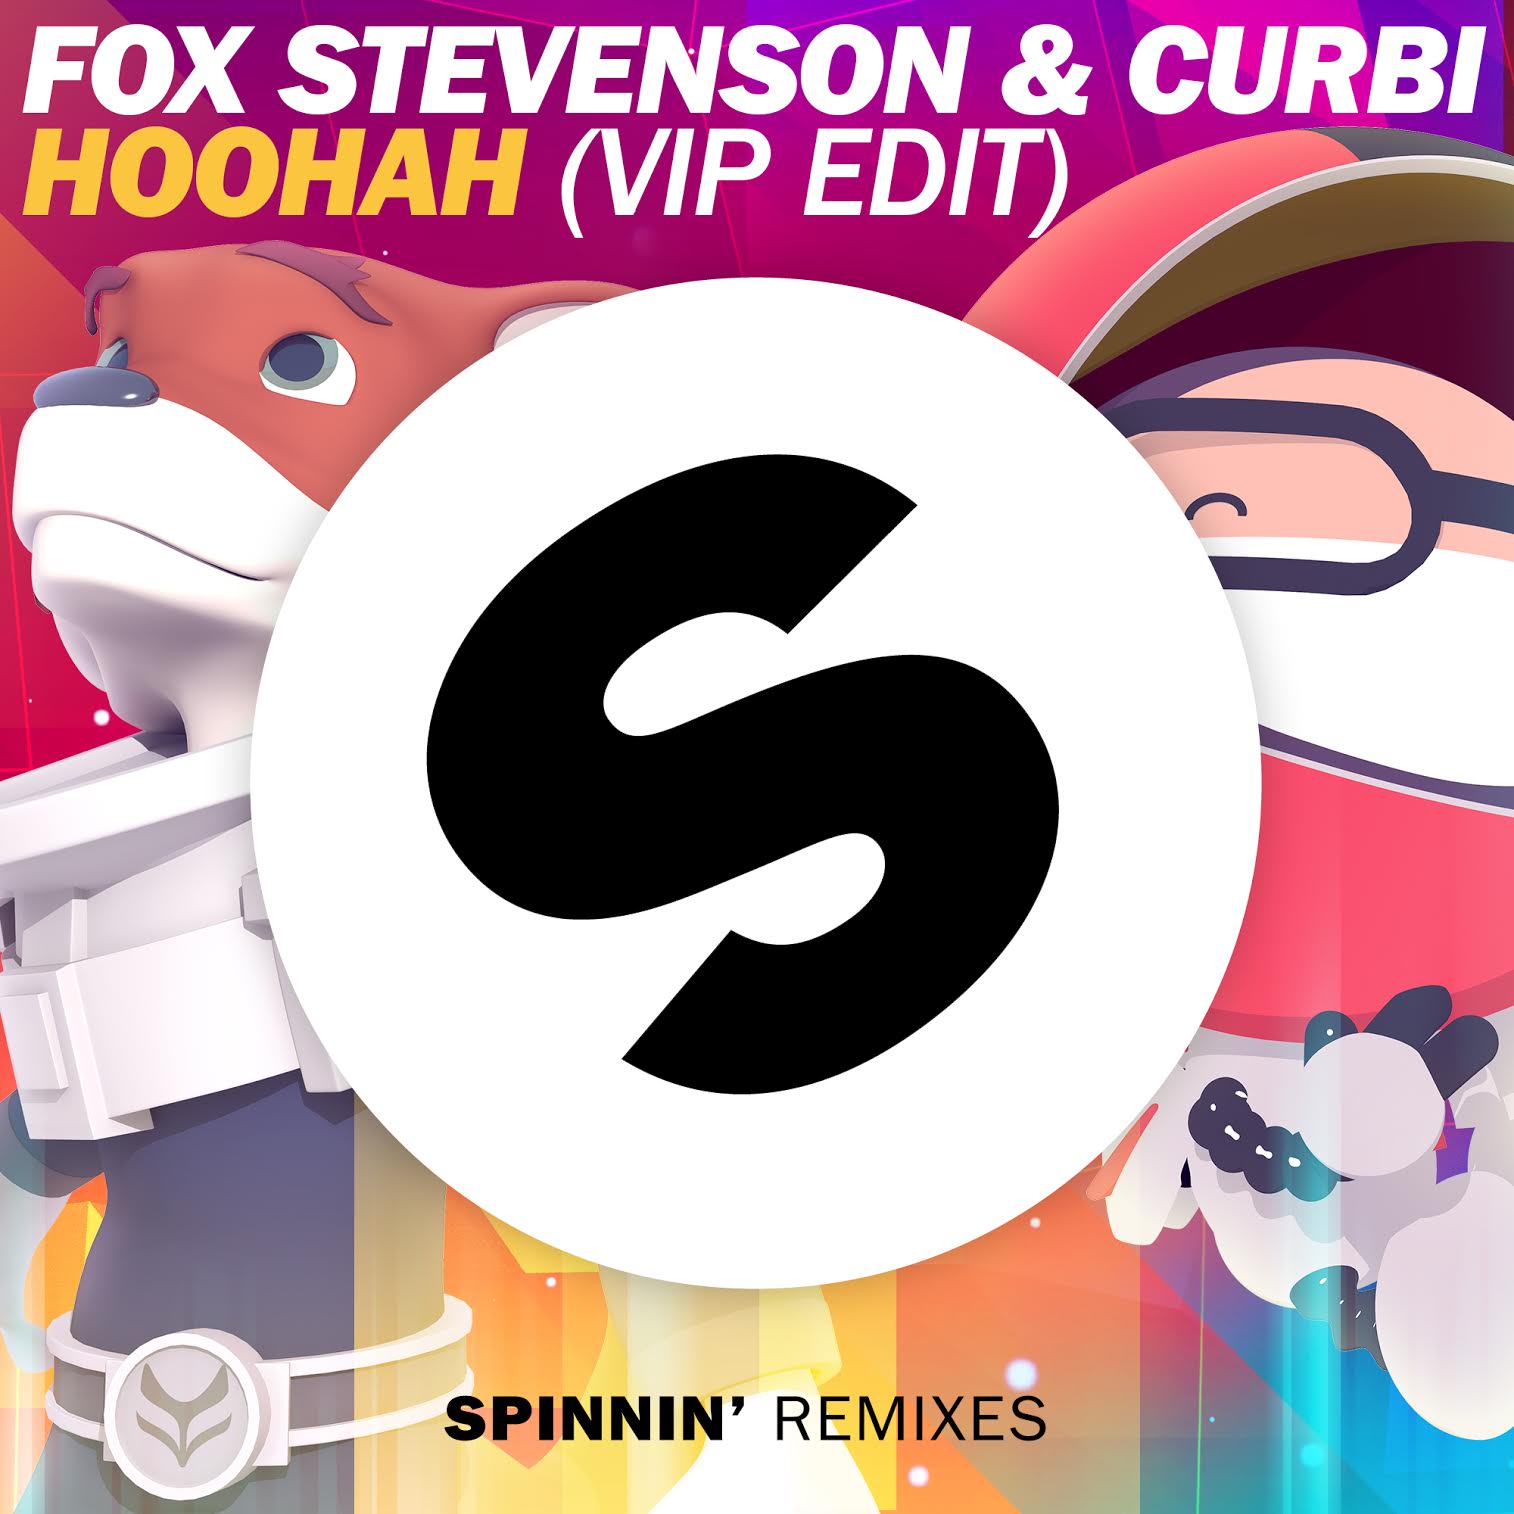 Fox Stevenson & Curbi — Hoohah - VIP Edit cover artwork